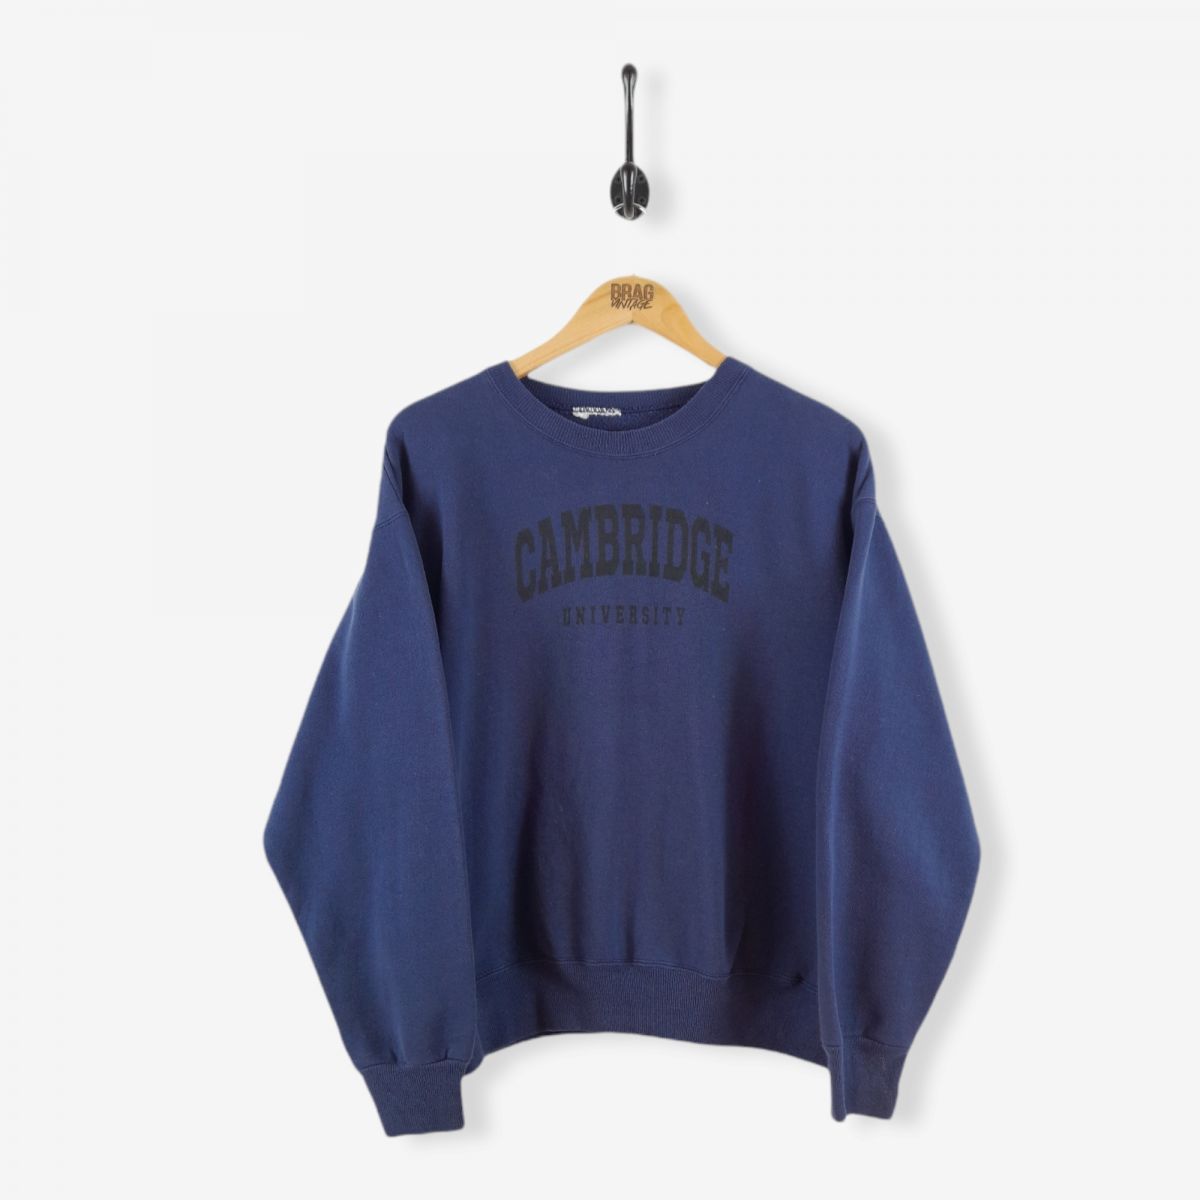 Vintage Cambridge University Sweatshirt Navy Blue Large